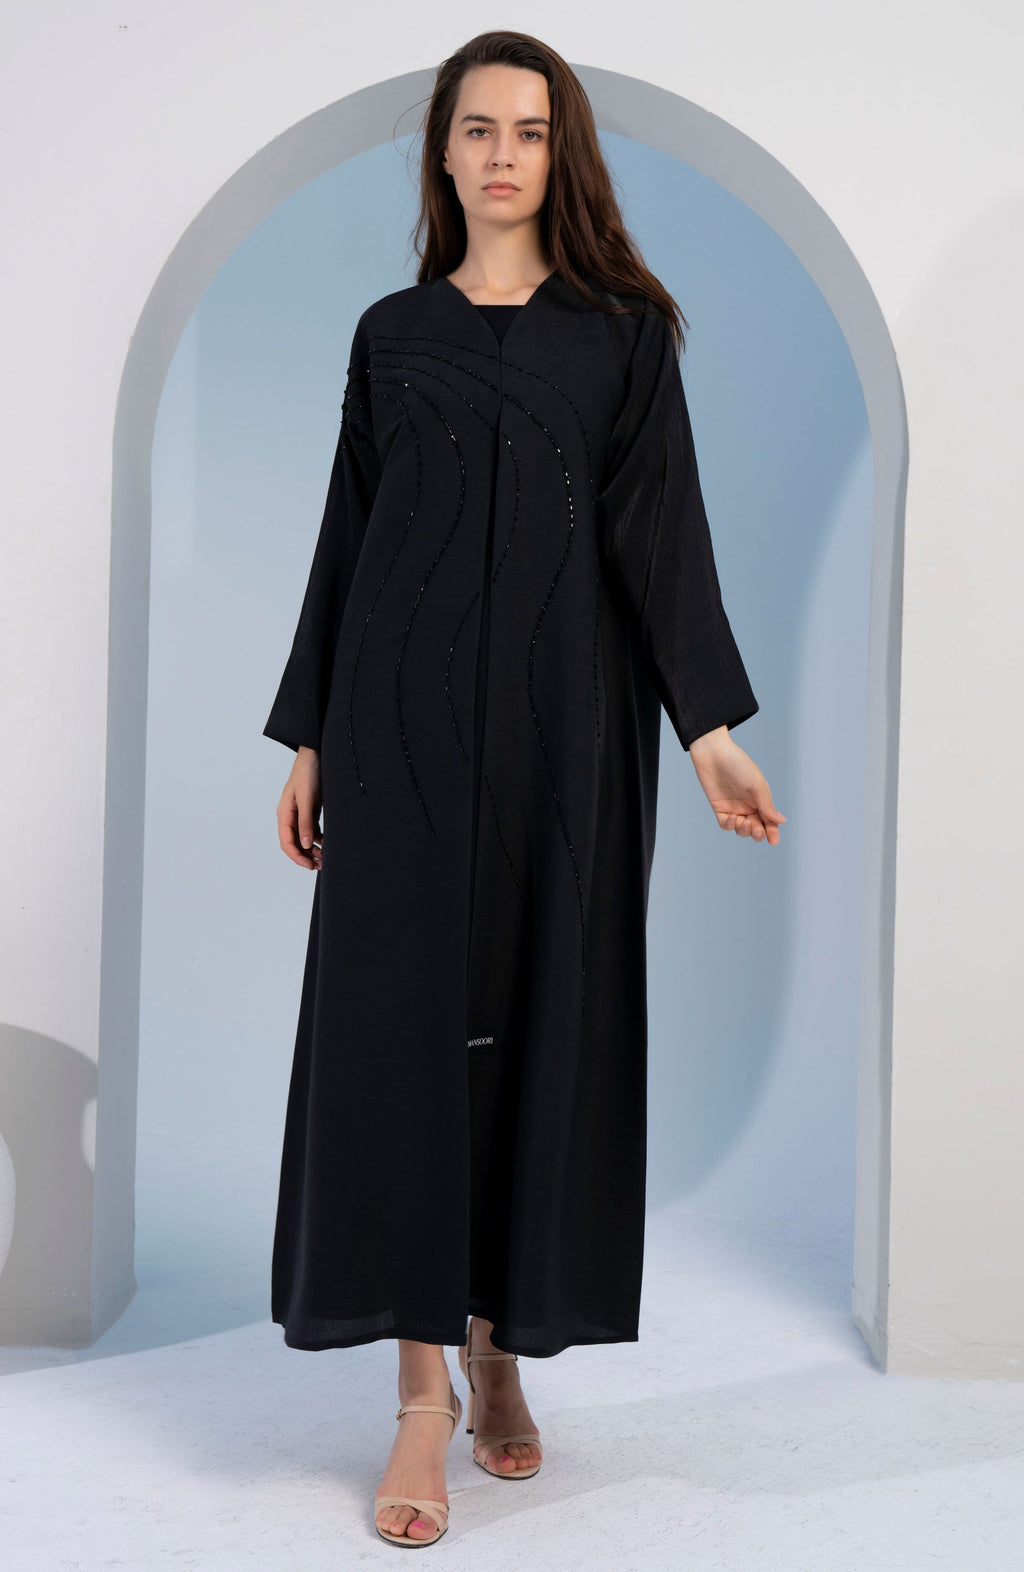 Black abaya with flowy patterned 